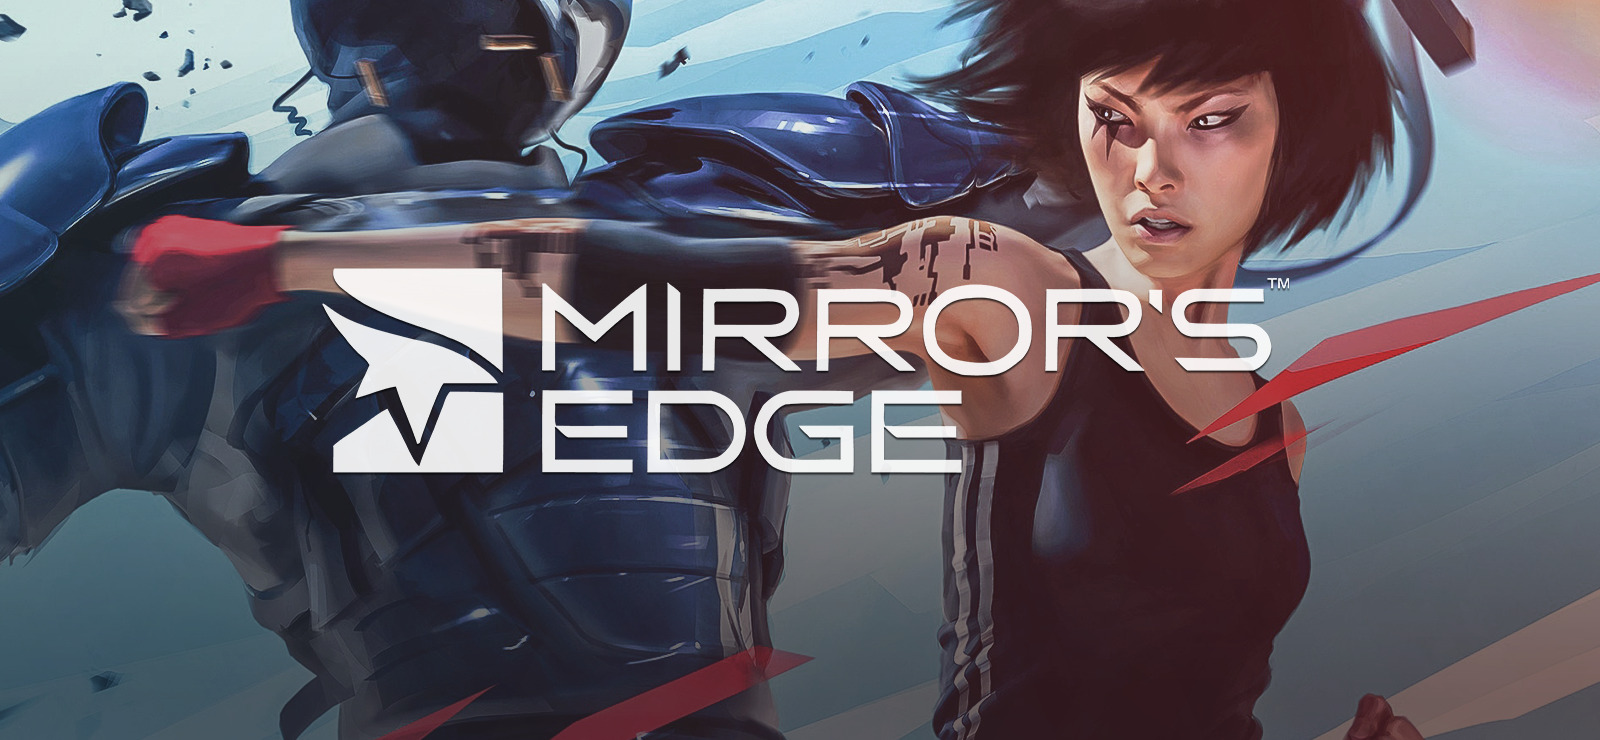 90% Mirror's Edge™ on